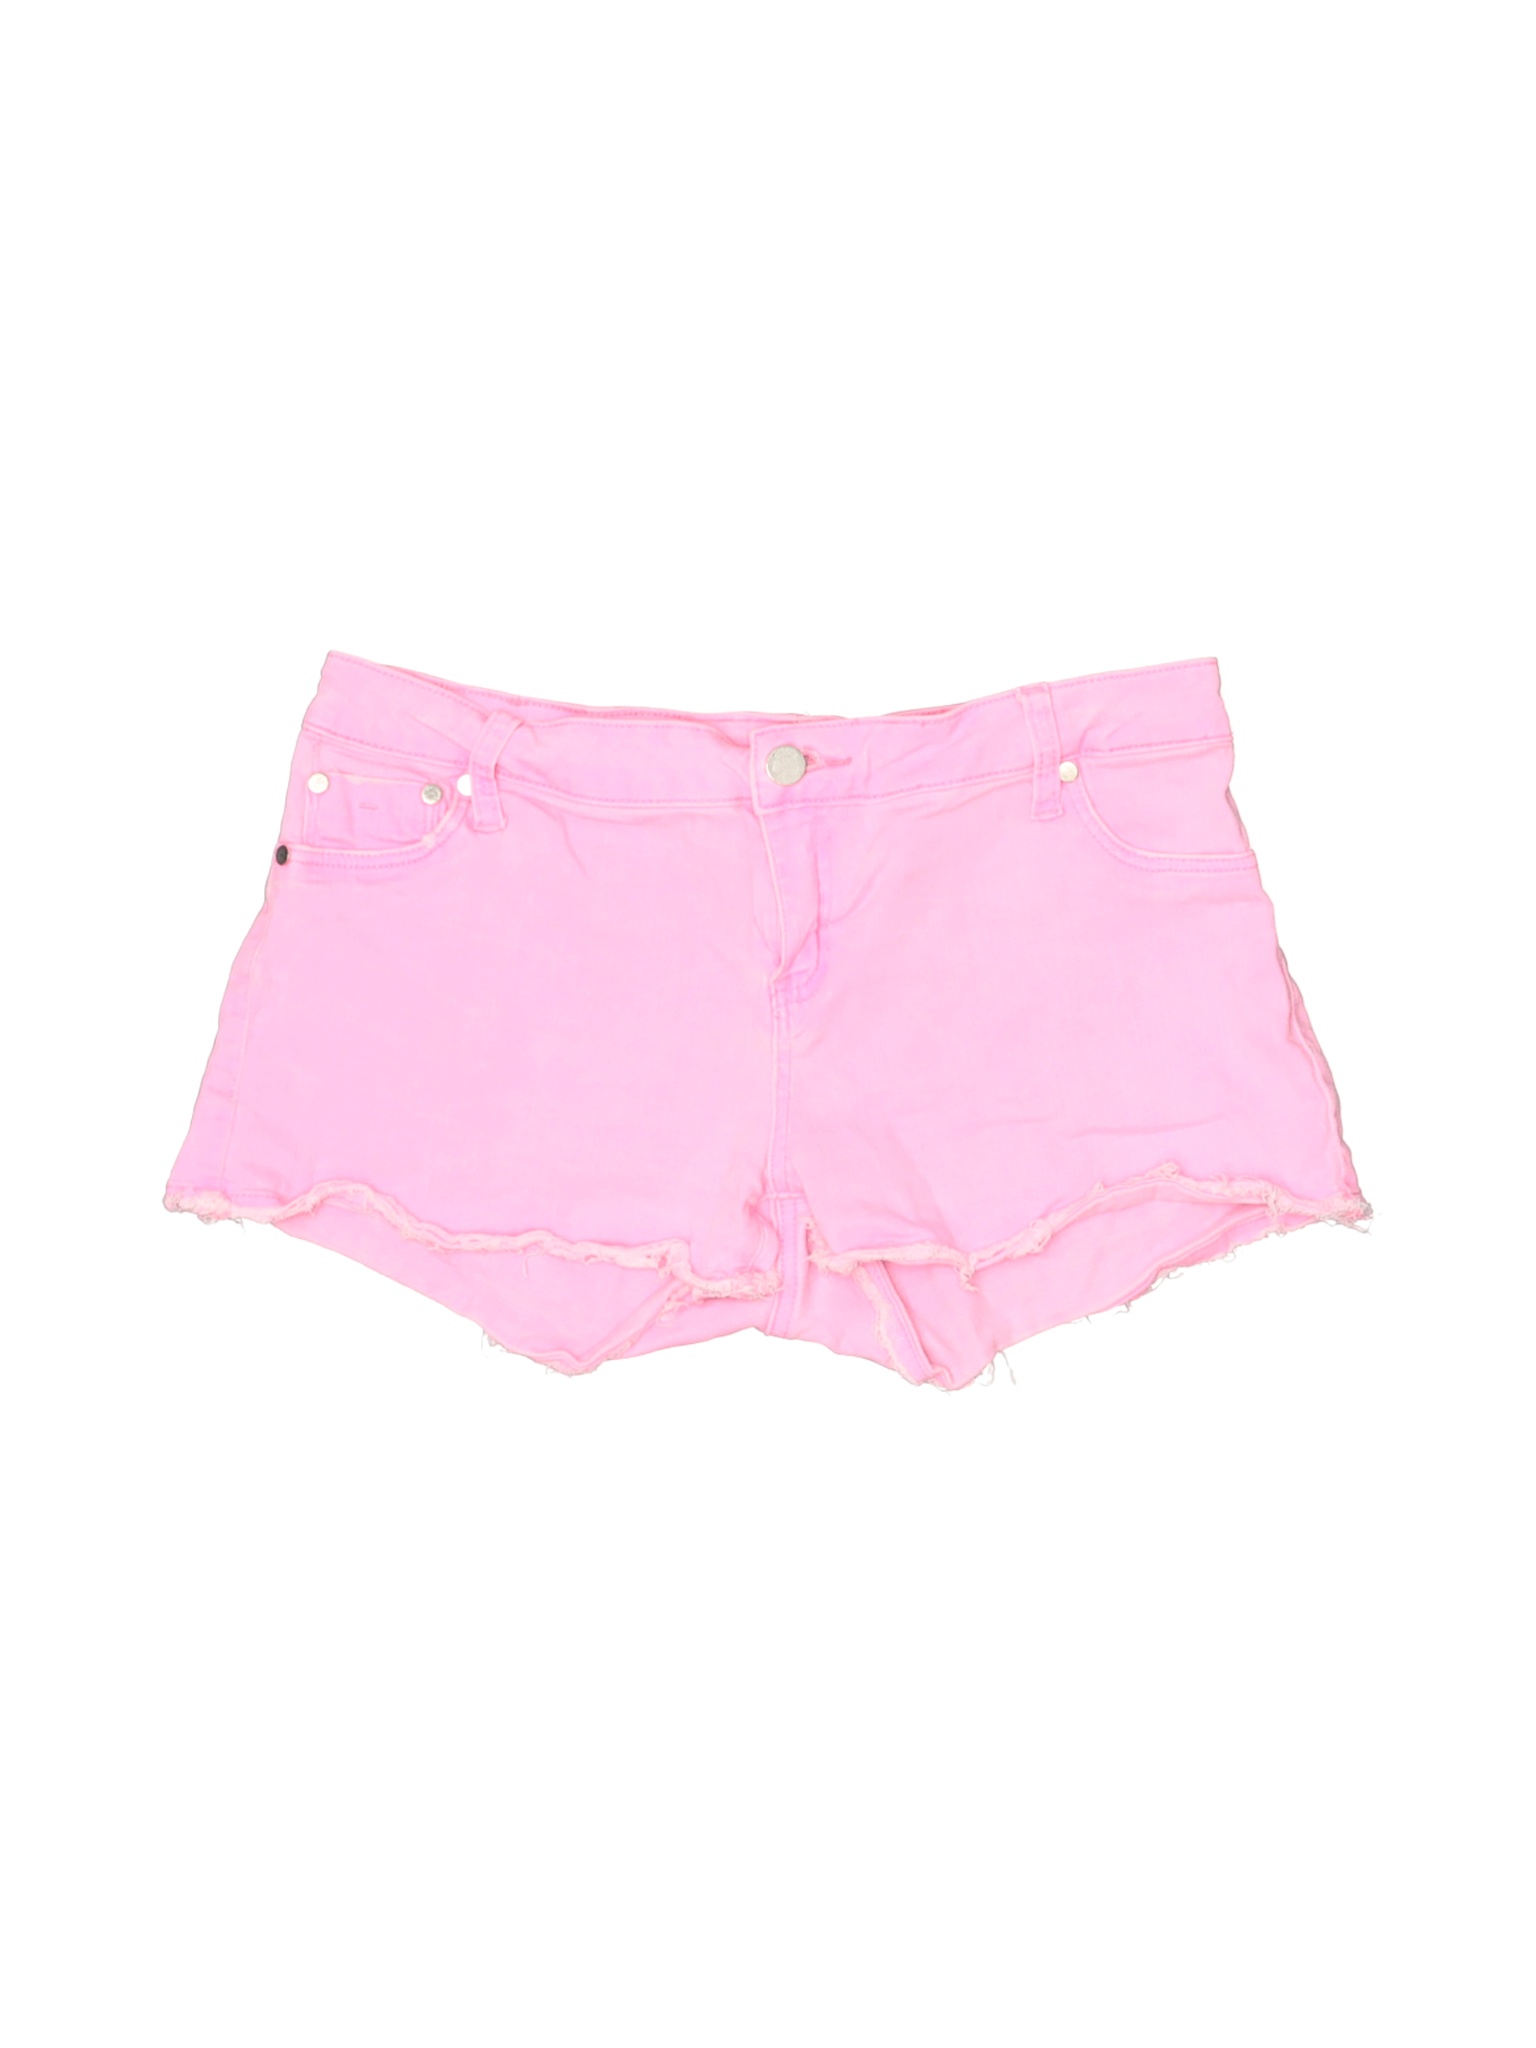 Assorted Brands Women Pink Denim Shorts 30W | eBay